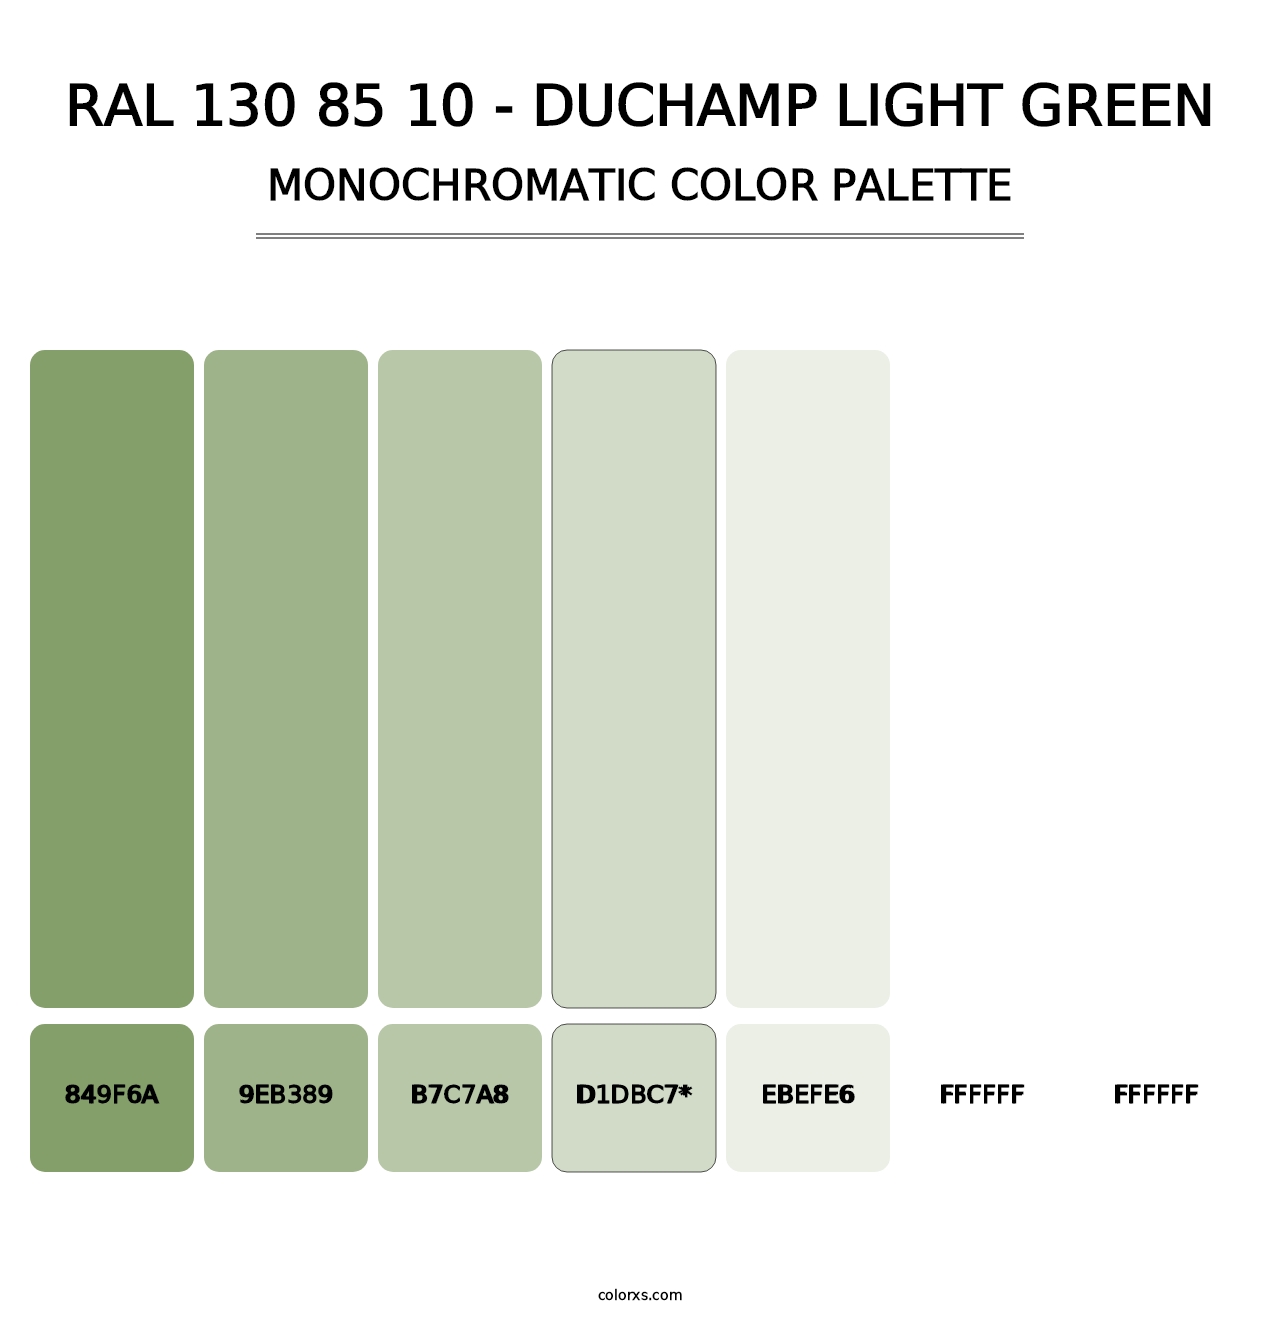 RAL 130 85 10 - Duchamp Light Green - Monochromatic Color Palette